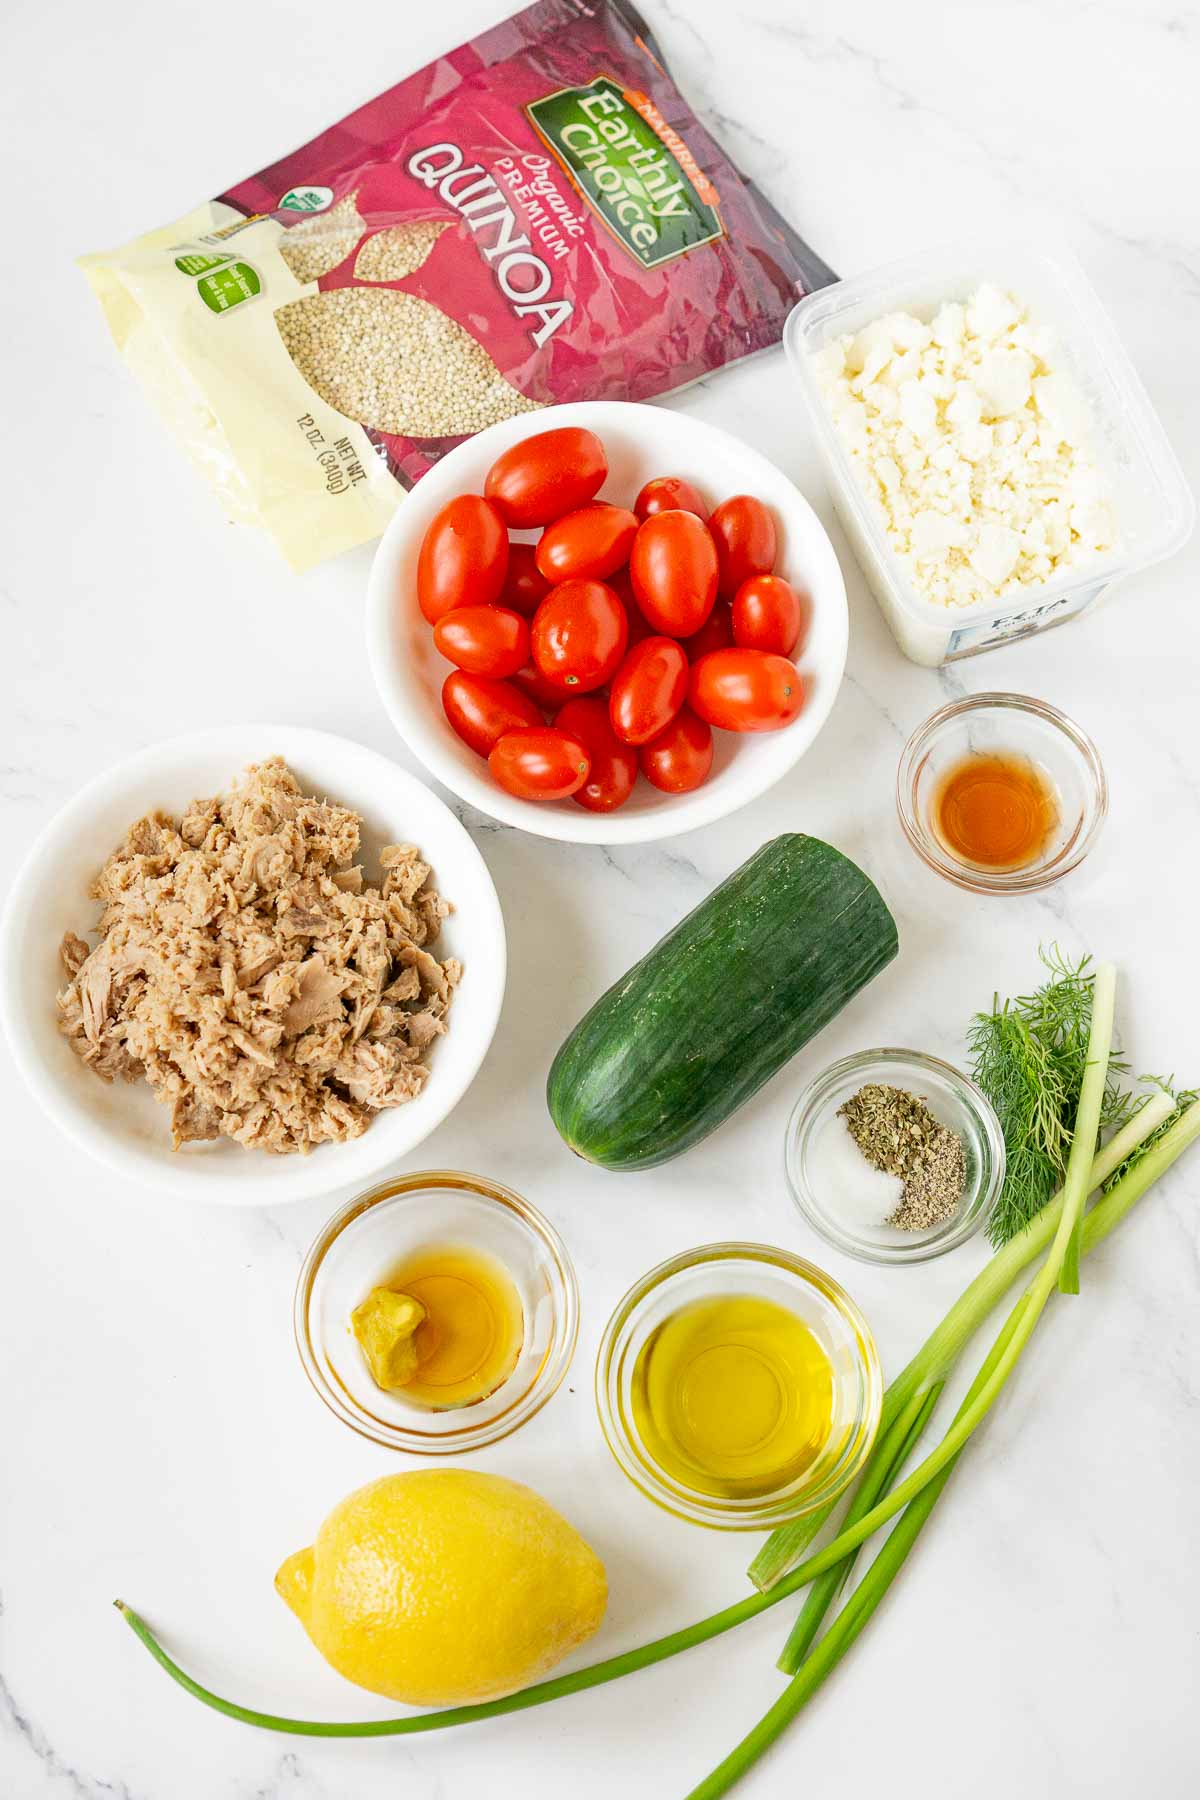 Ingredients to make quinoa tuna salad